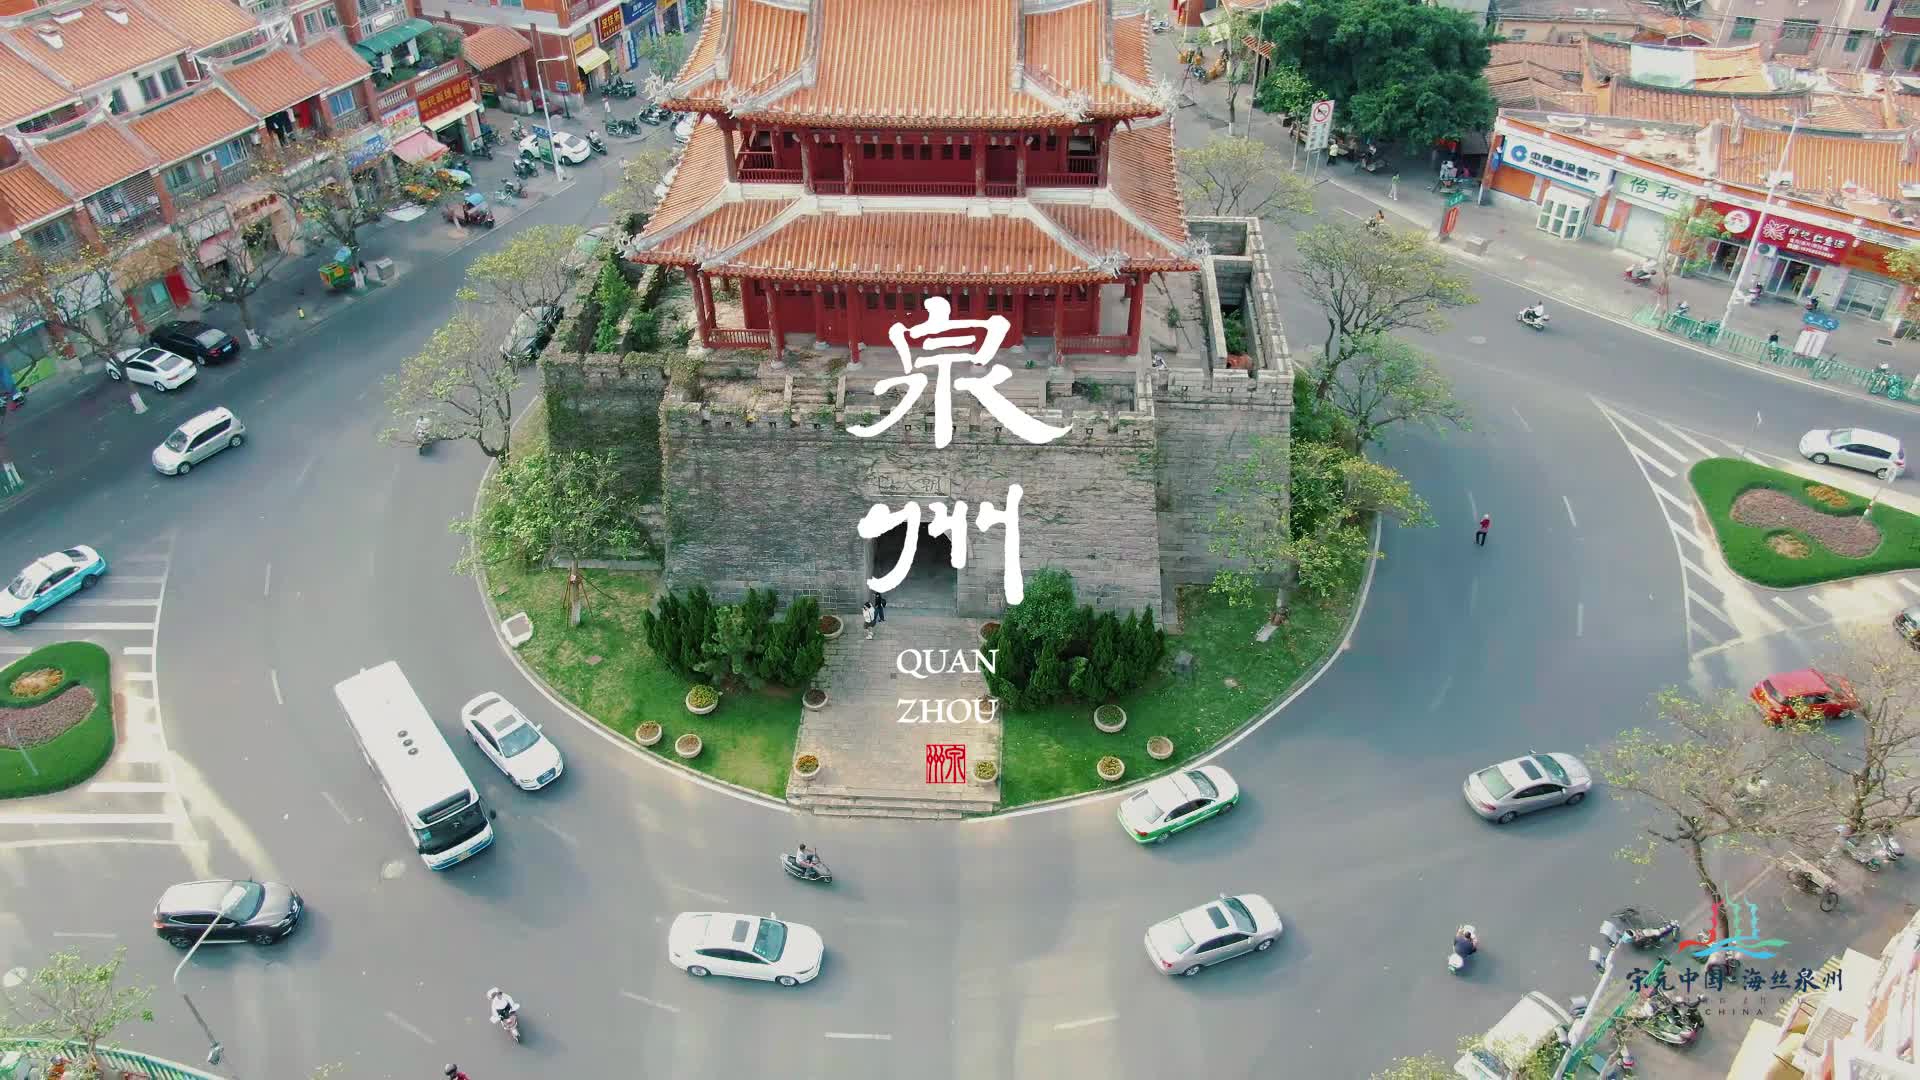 Explore the vibrancy of SE China's Quanzhou